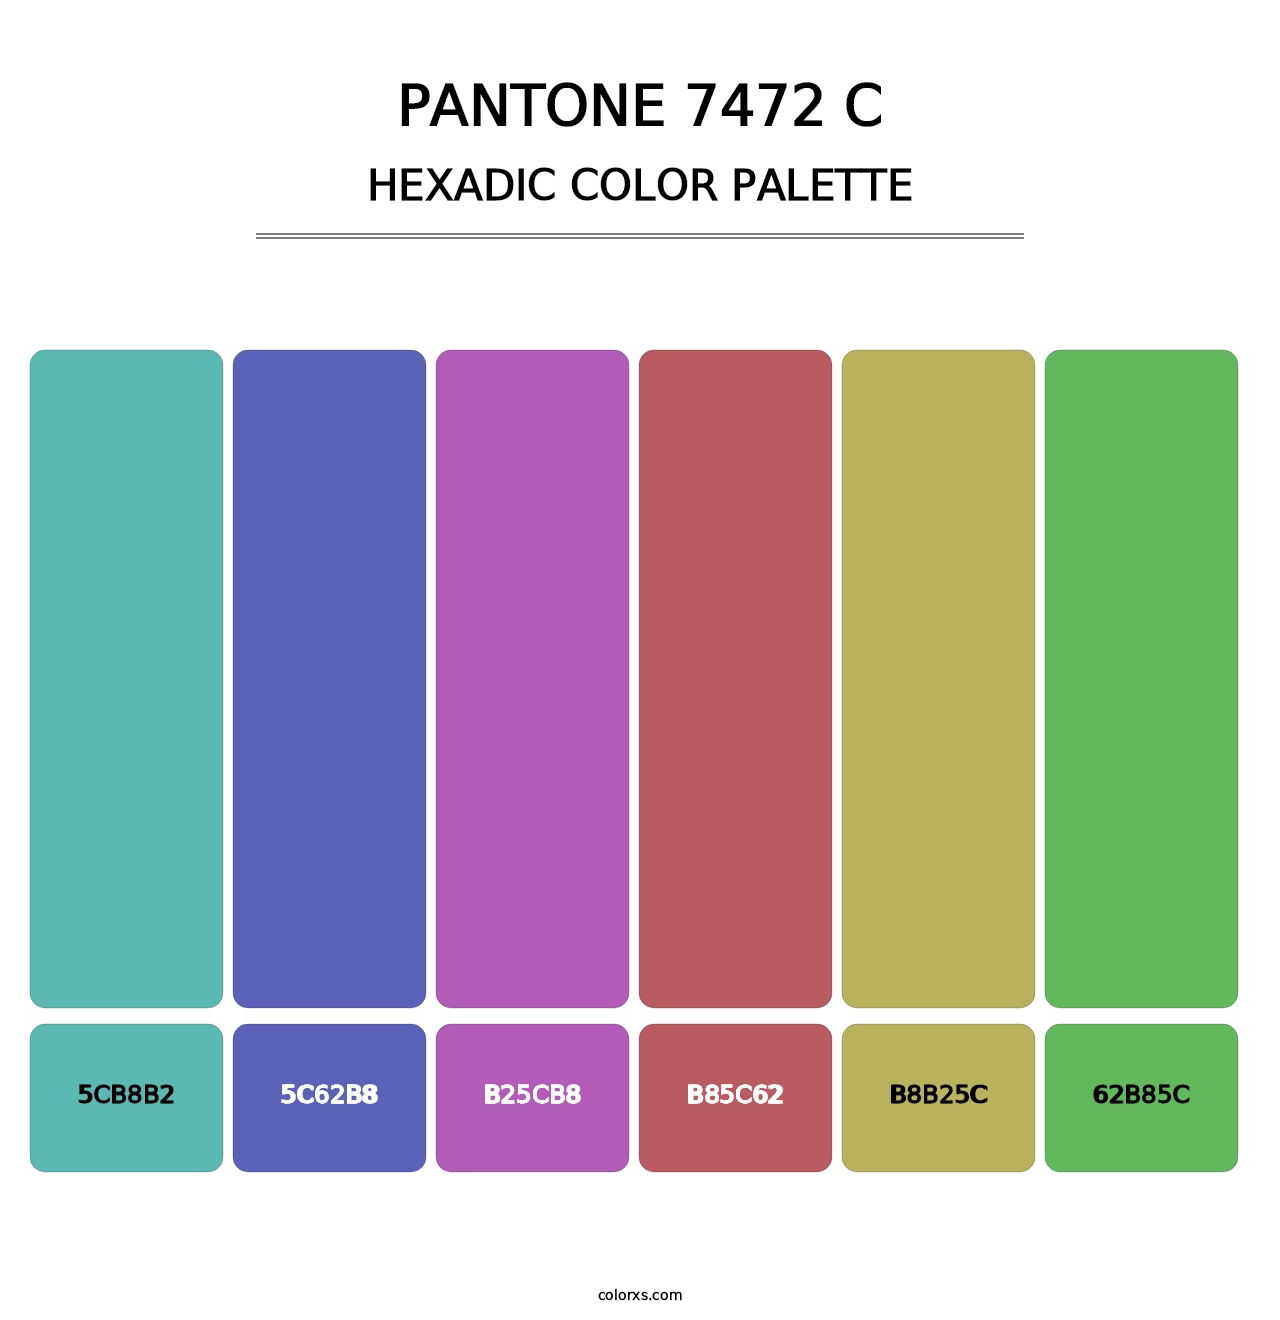 PANTONE 7472 C - Hexadic Color Palette